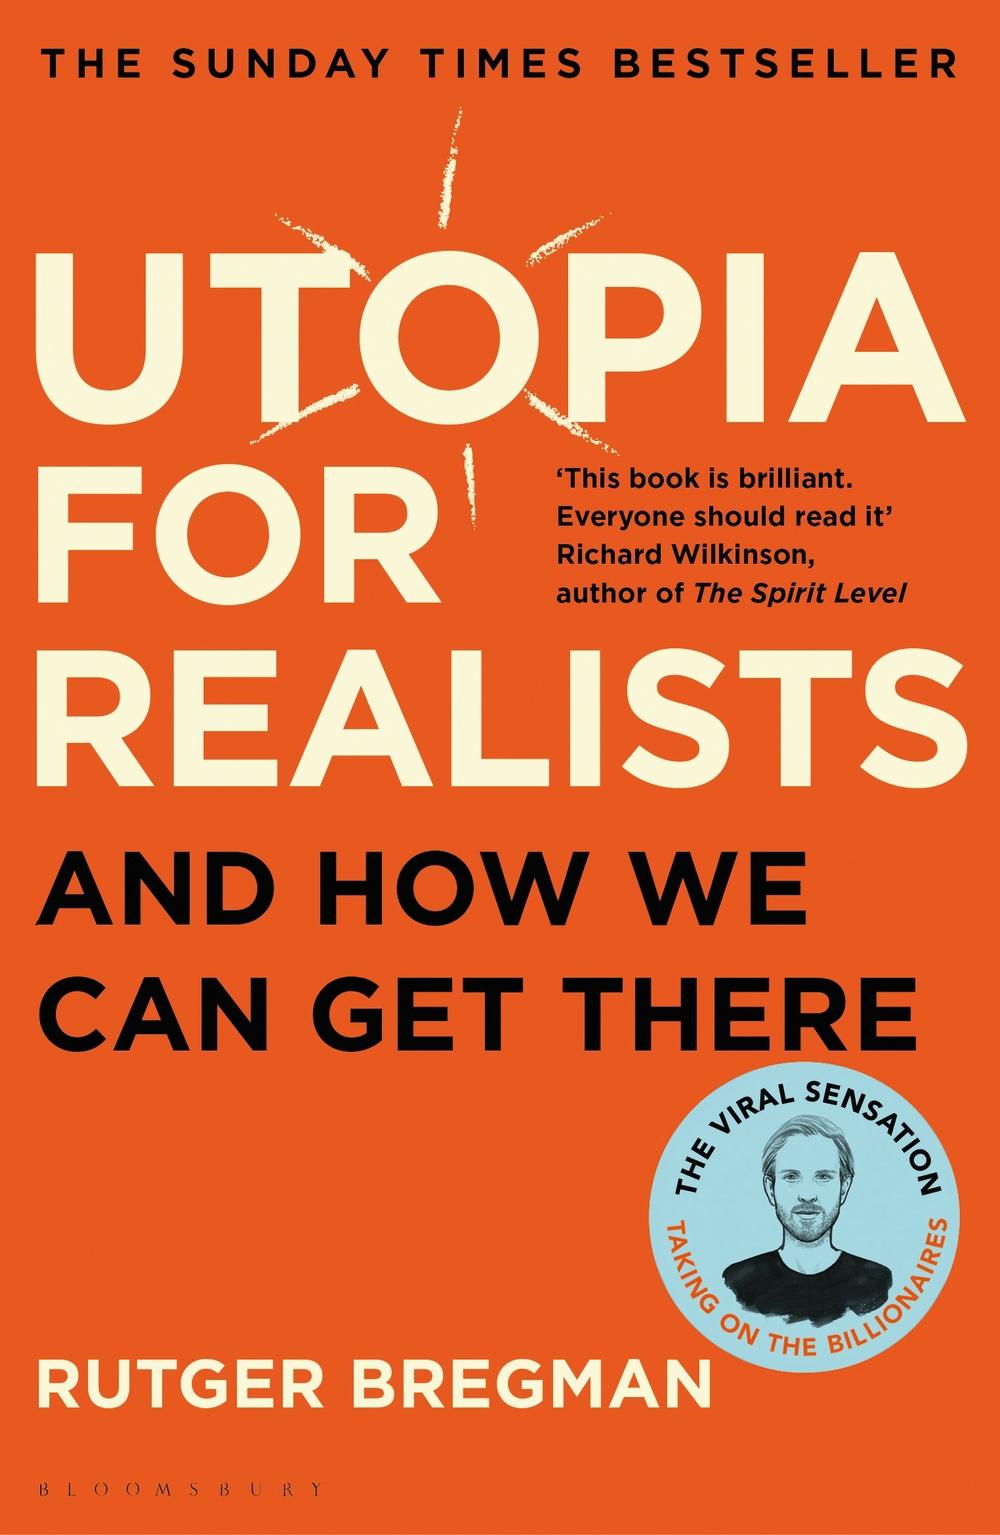 bregman utopia for realists